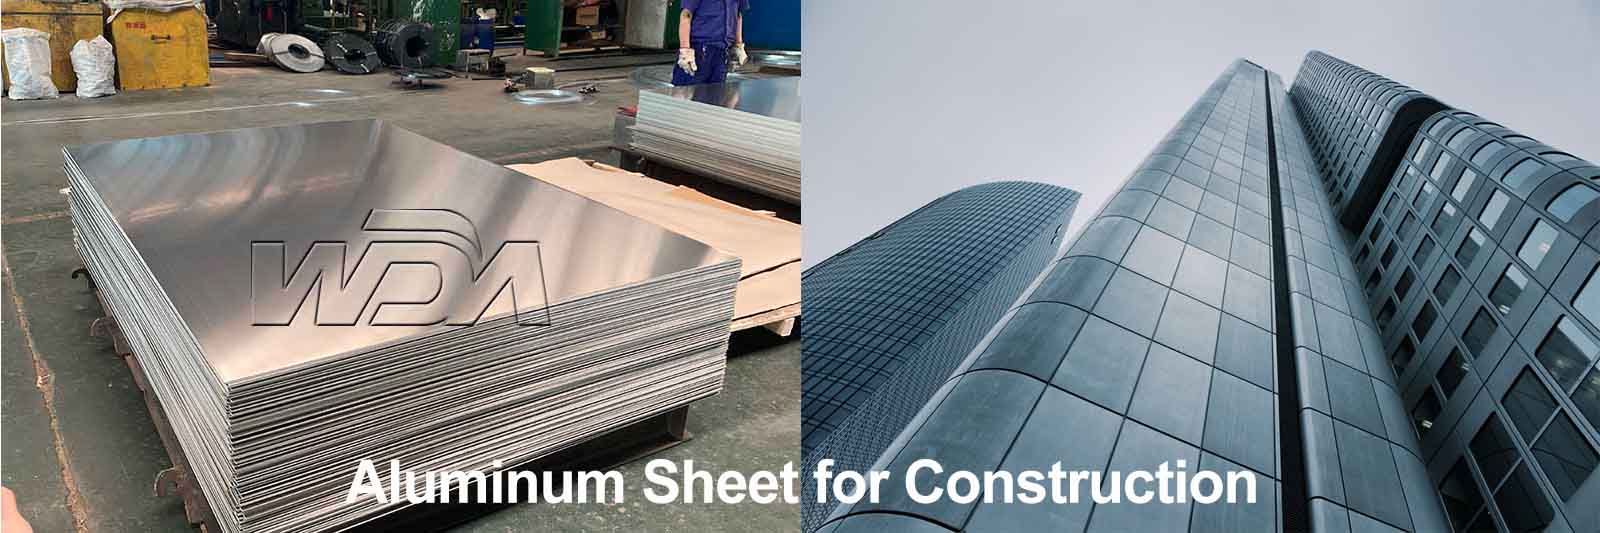 aluminum sheet for construction use